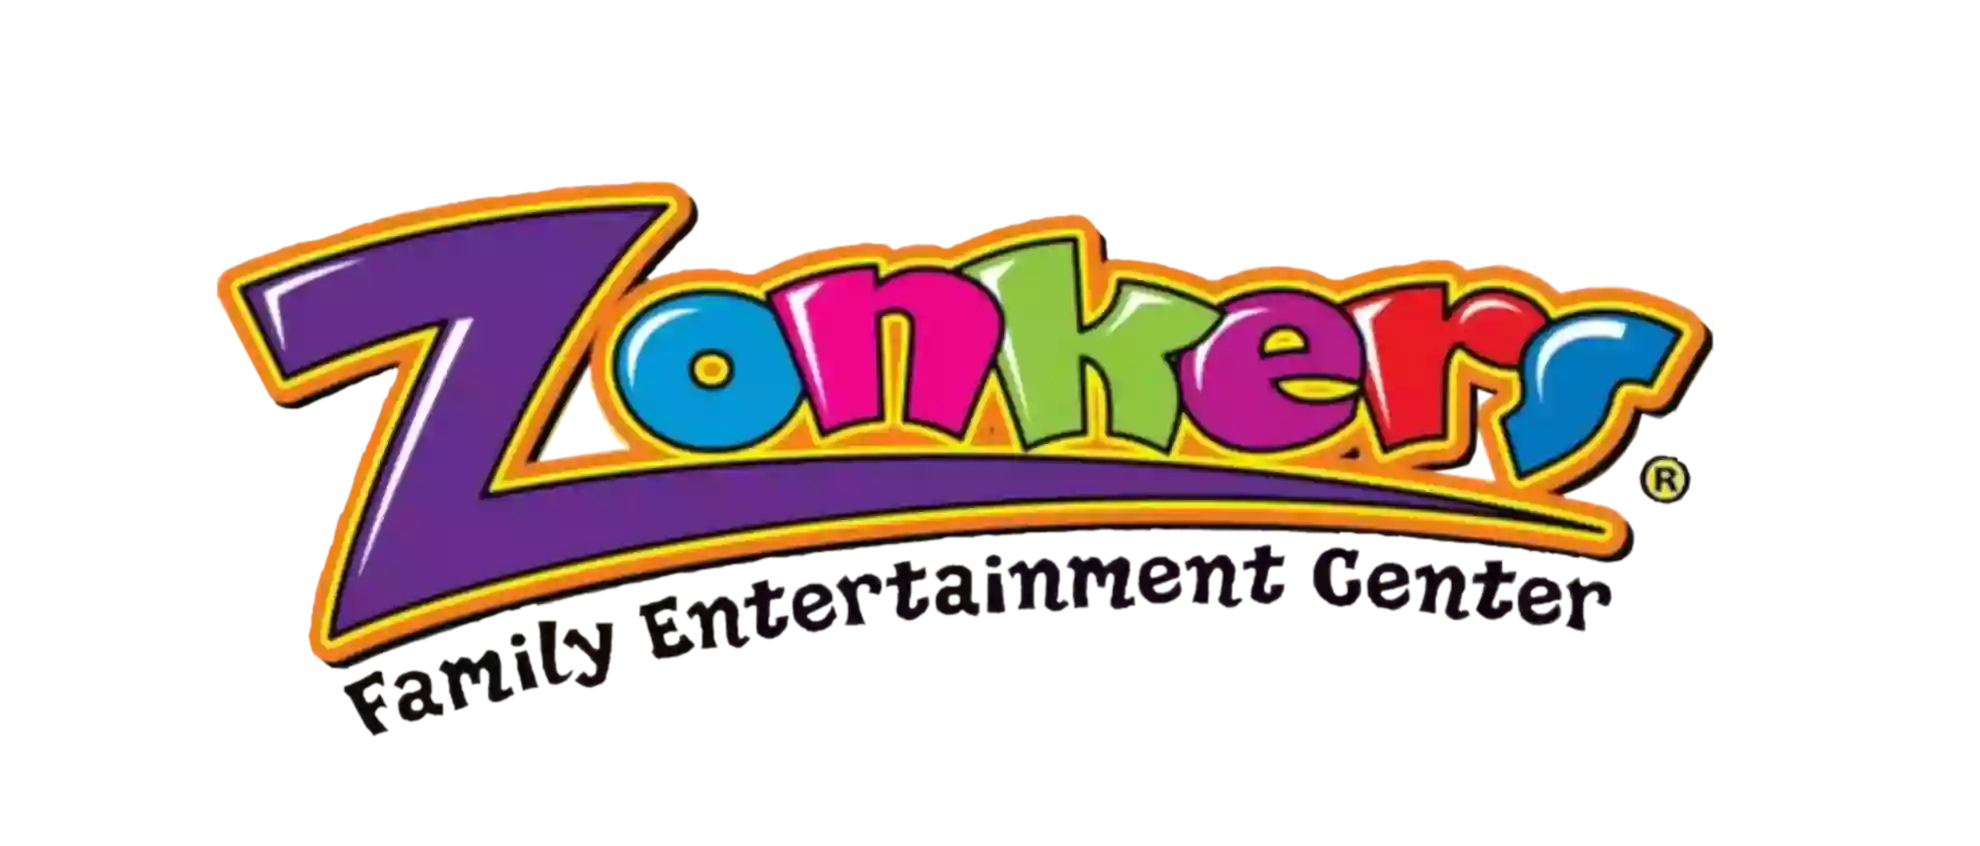 Zonkers Family Entertainment Center